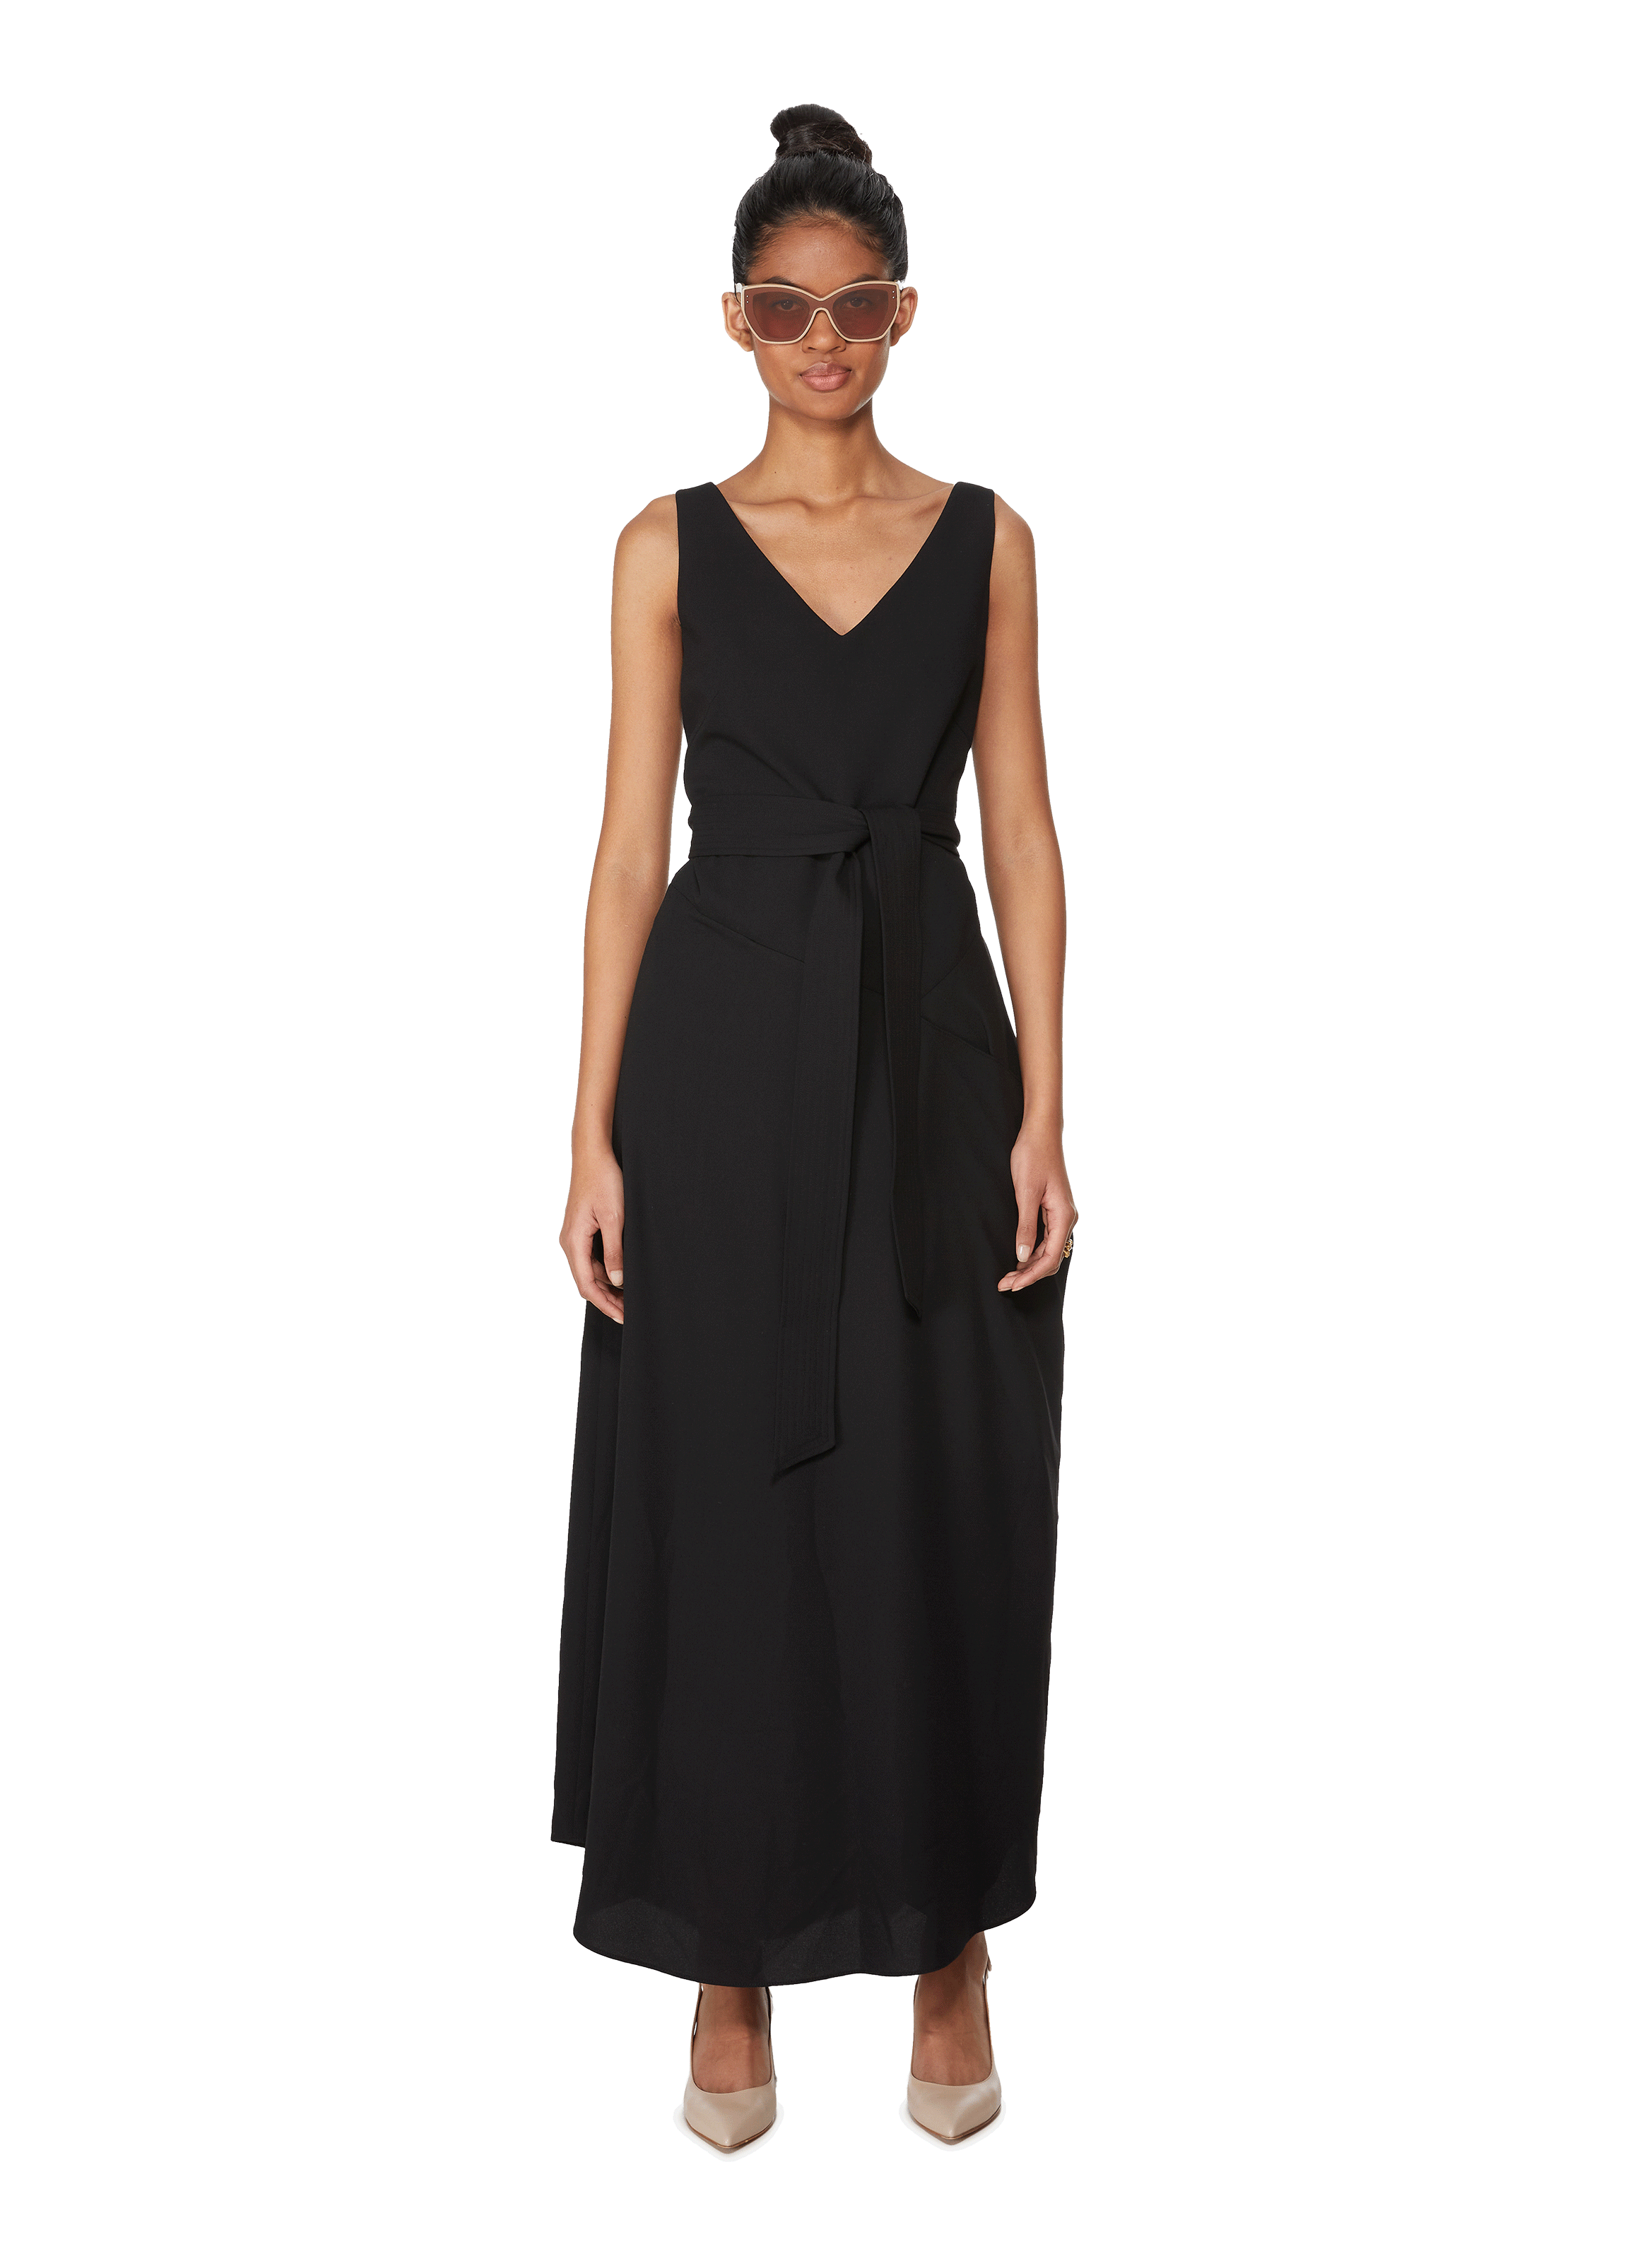 Mode Robes Robes épaules nues Zara Woman Robe \u00e9paules nues noir style festif 